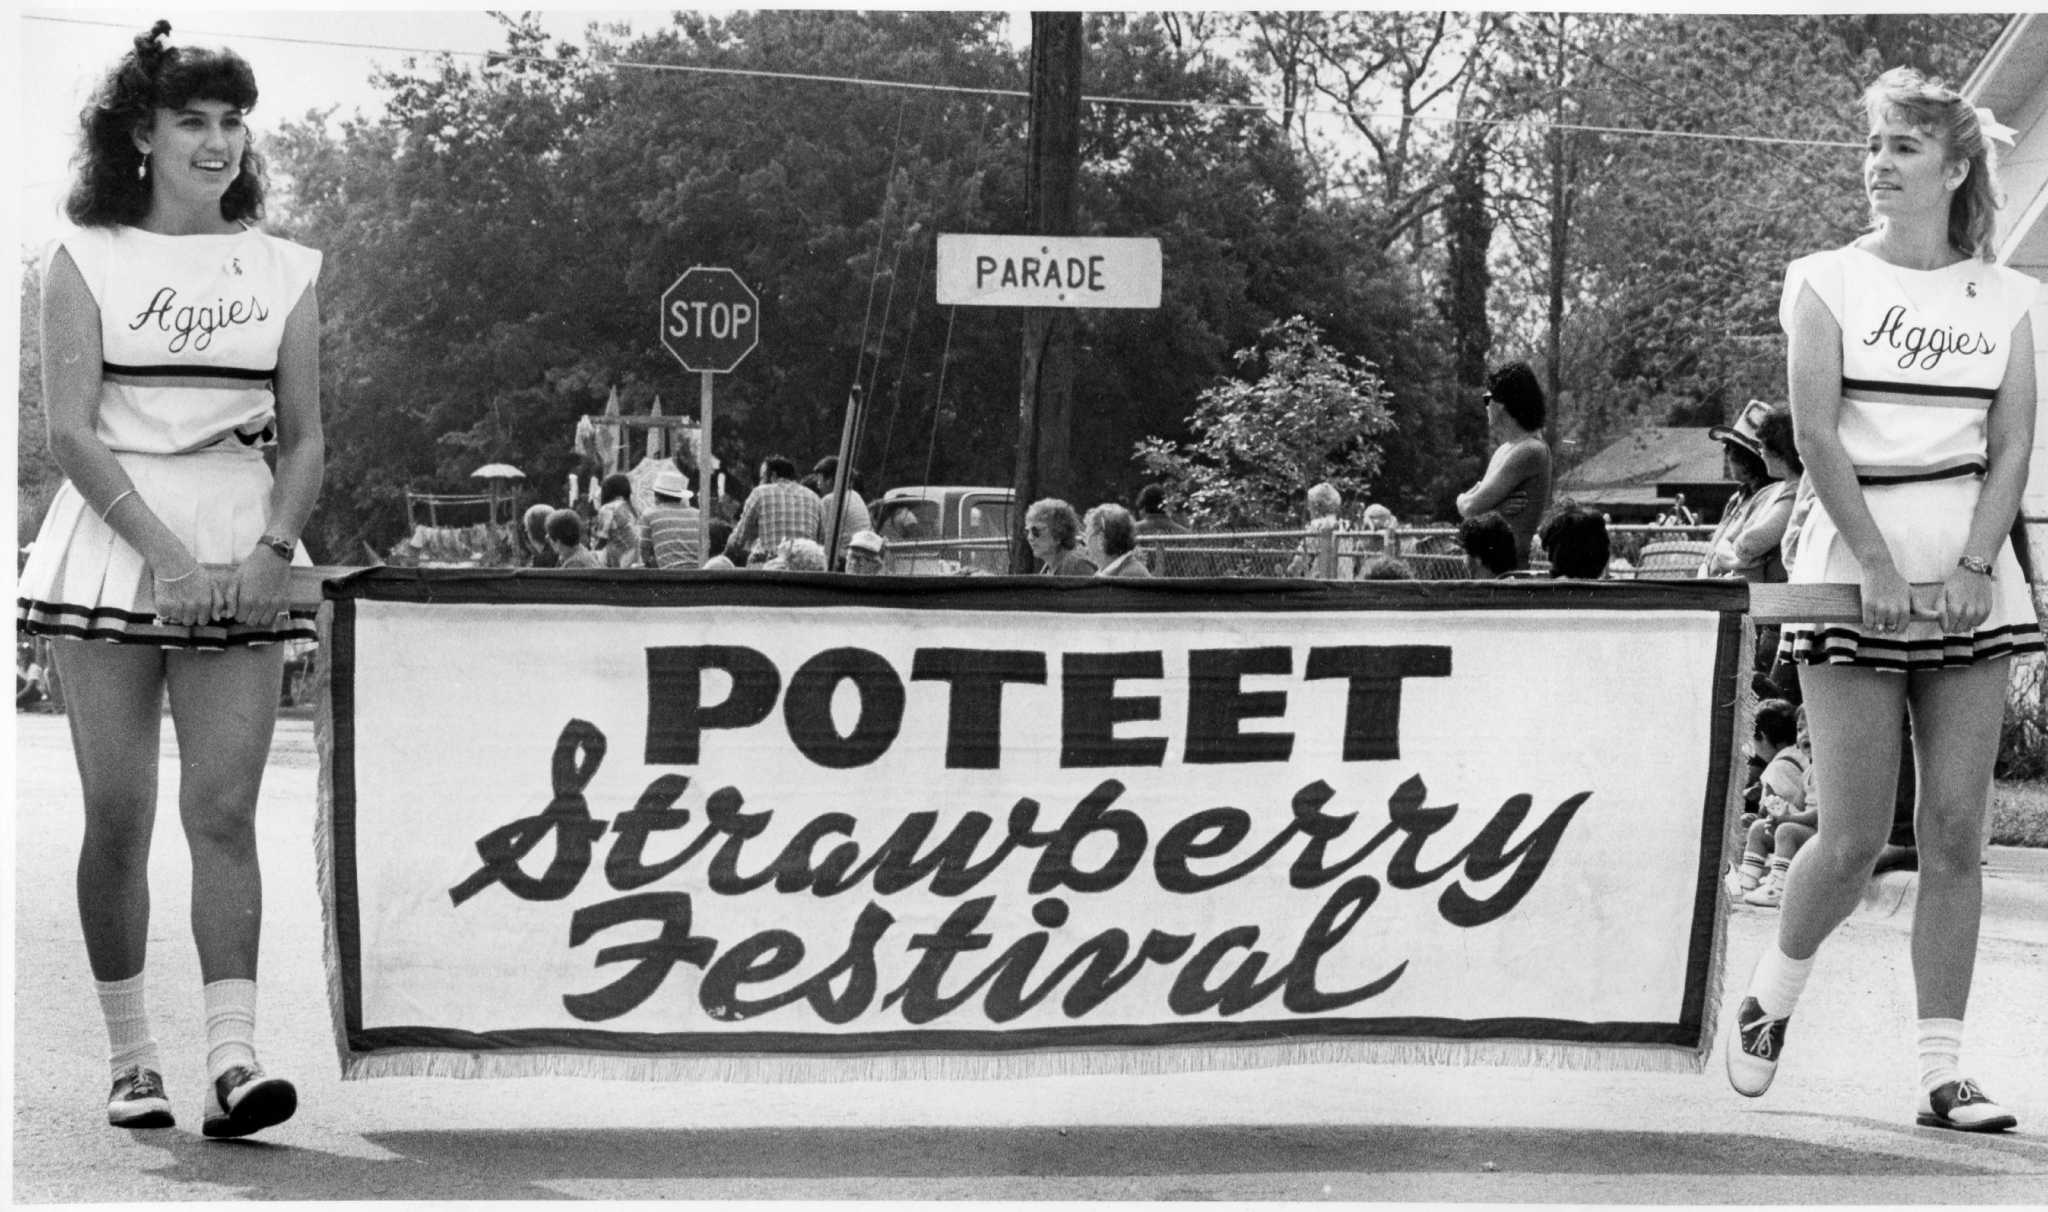 Poteet Strawberry Festival vintage photographs